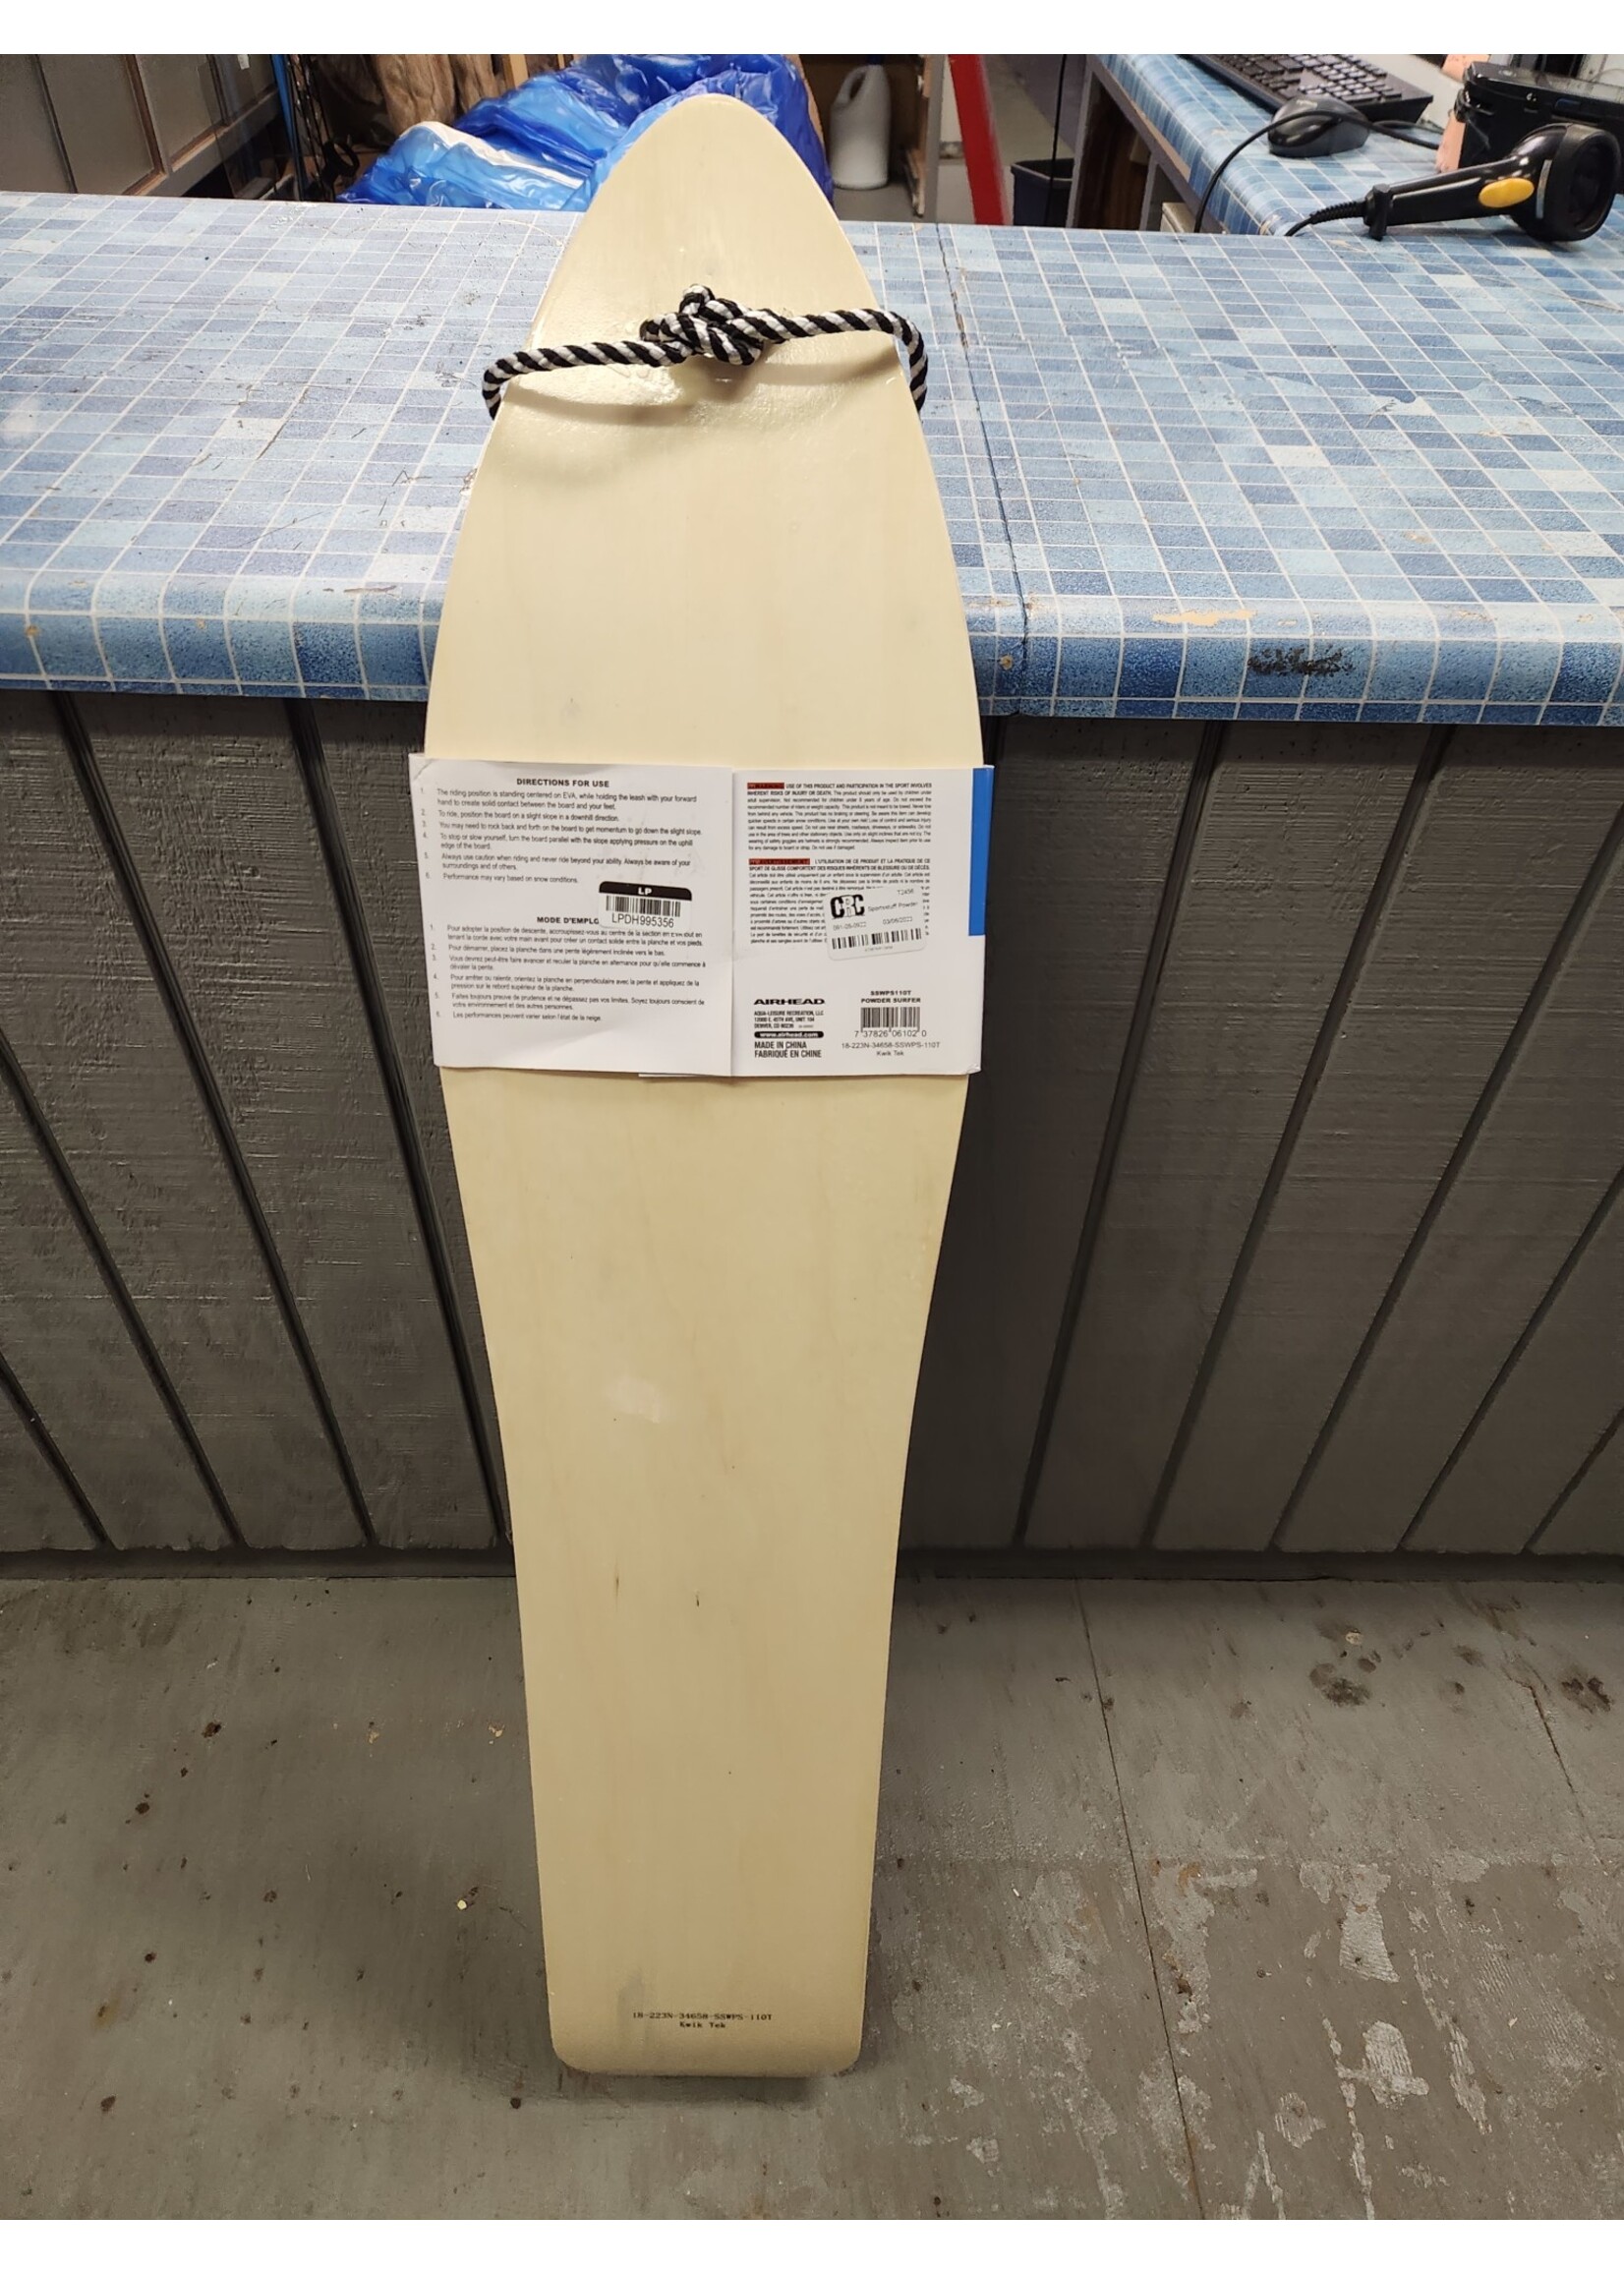 Sportsstuff Powder Surfer - 110cm (43")